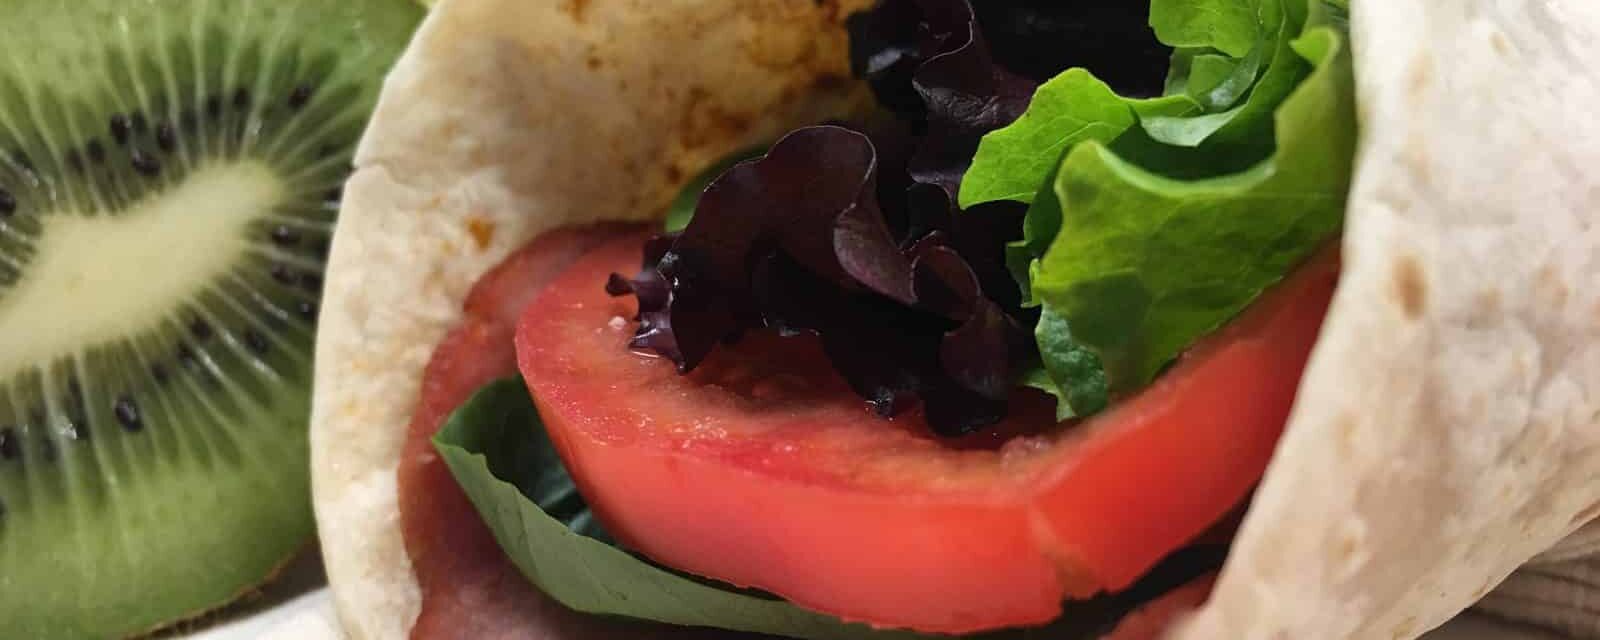 CARE Recipe: BLT Turkey Wrap with Kiwi Fruit